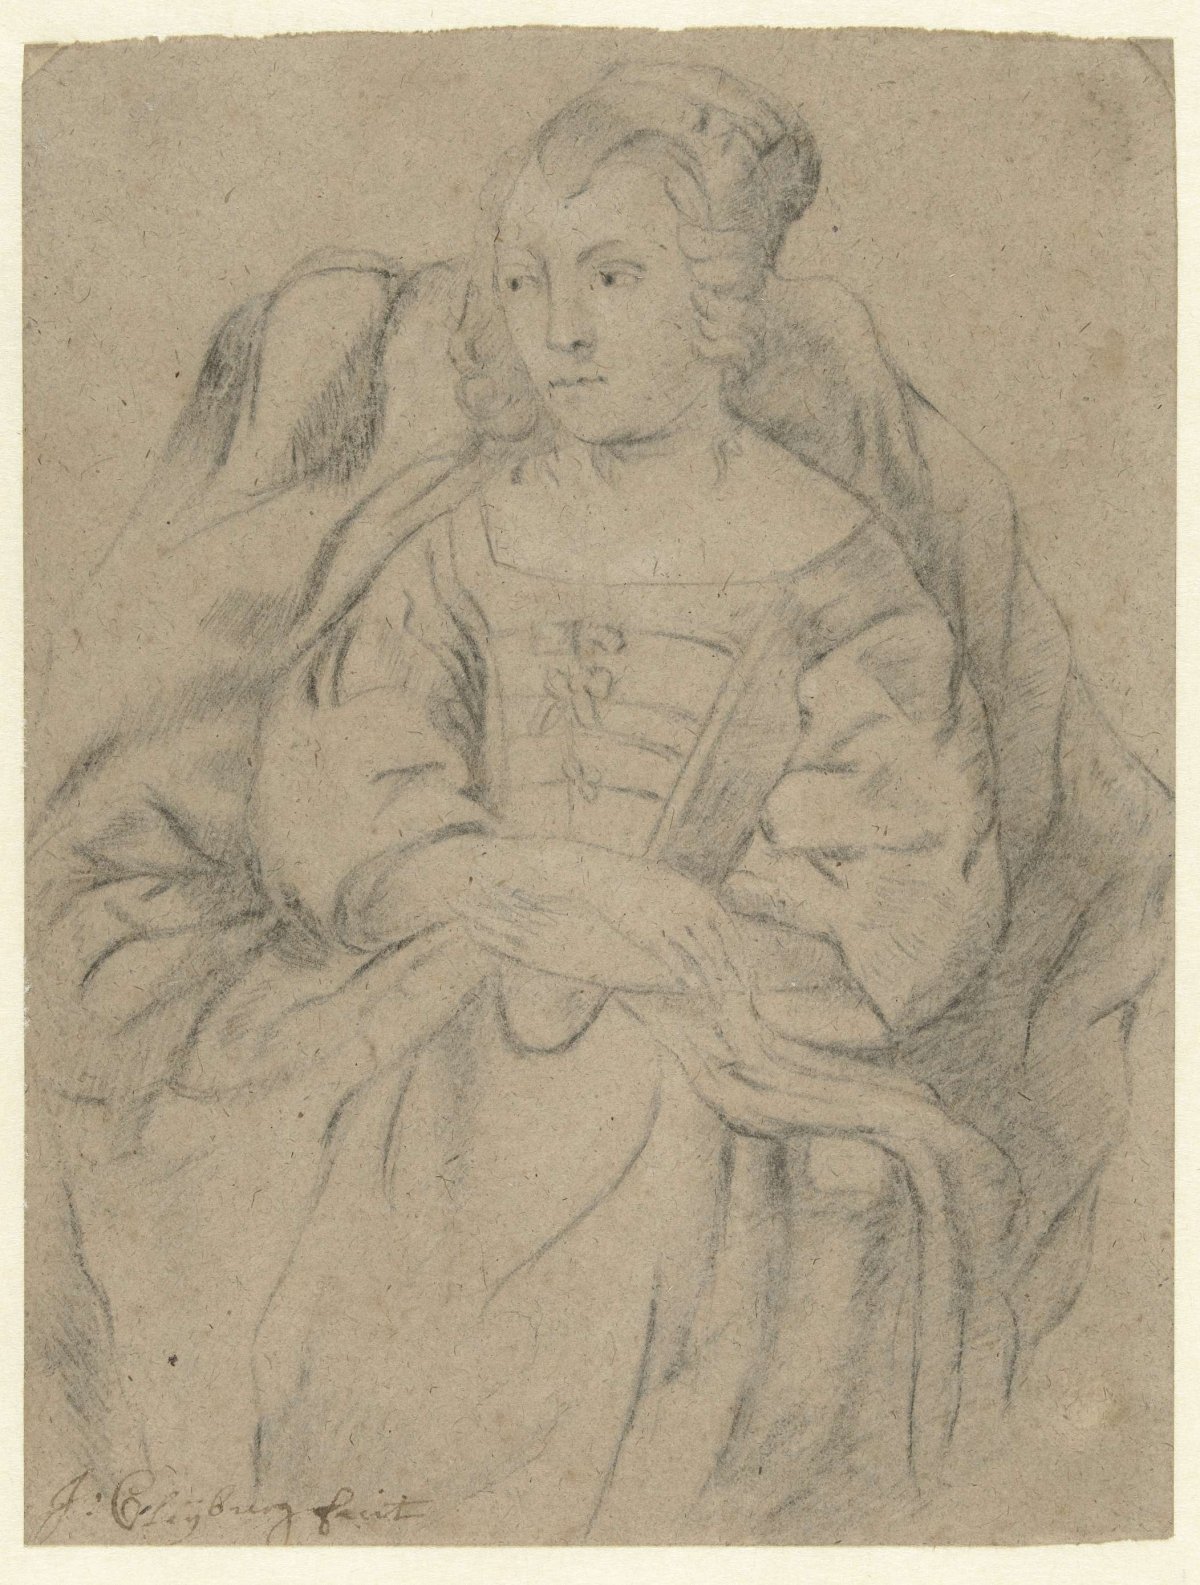 Vrouwenportret, Joh. Cleyburg, 1650 - 1670